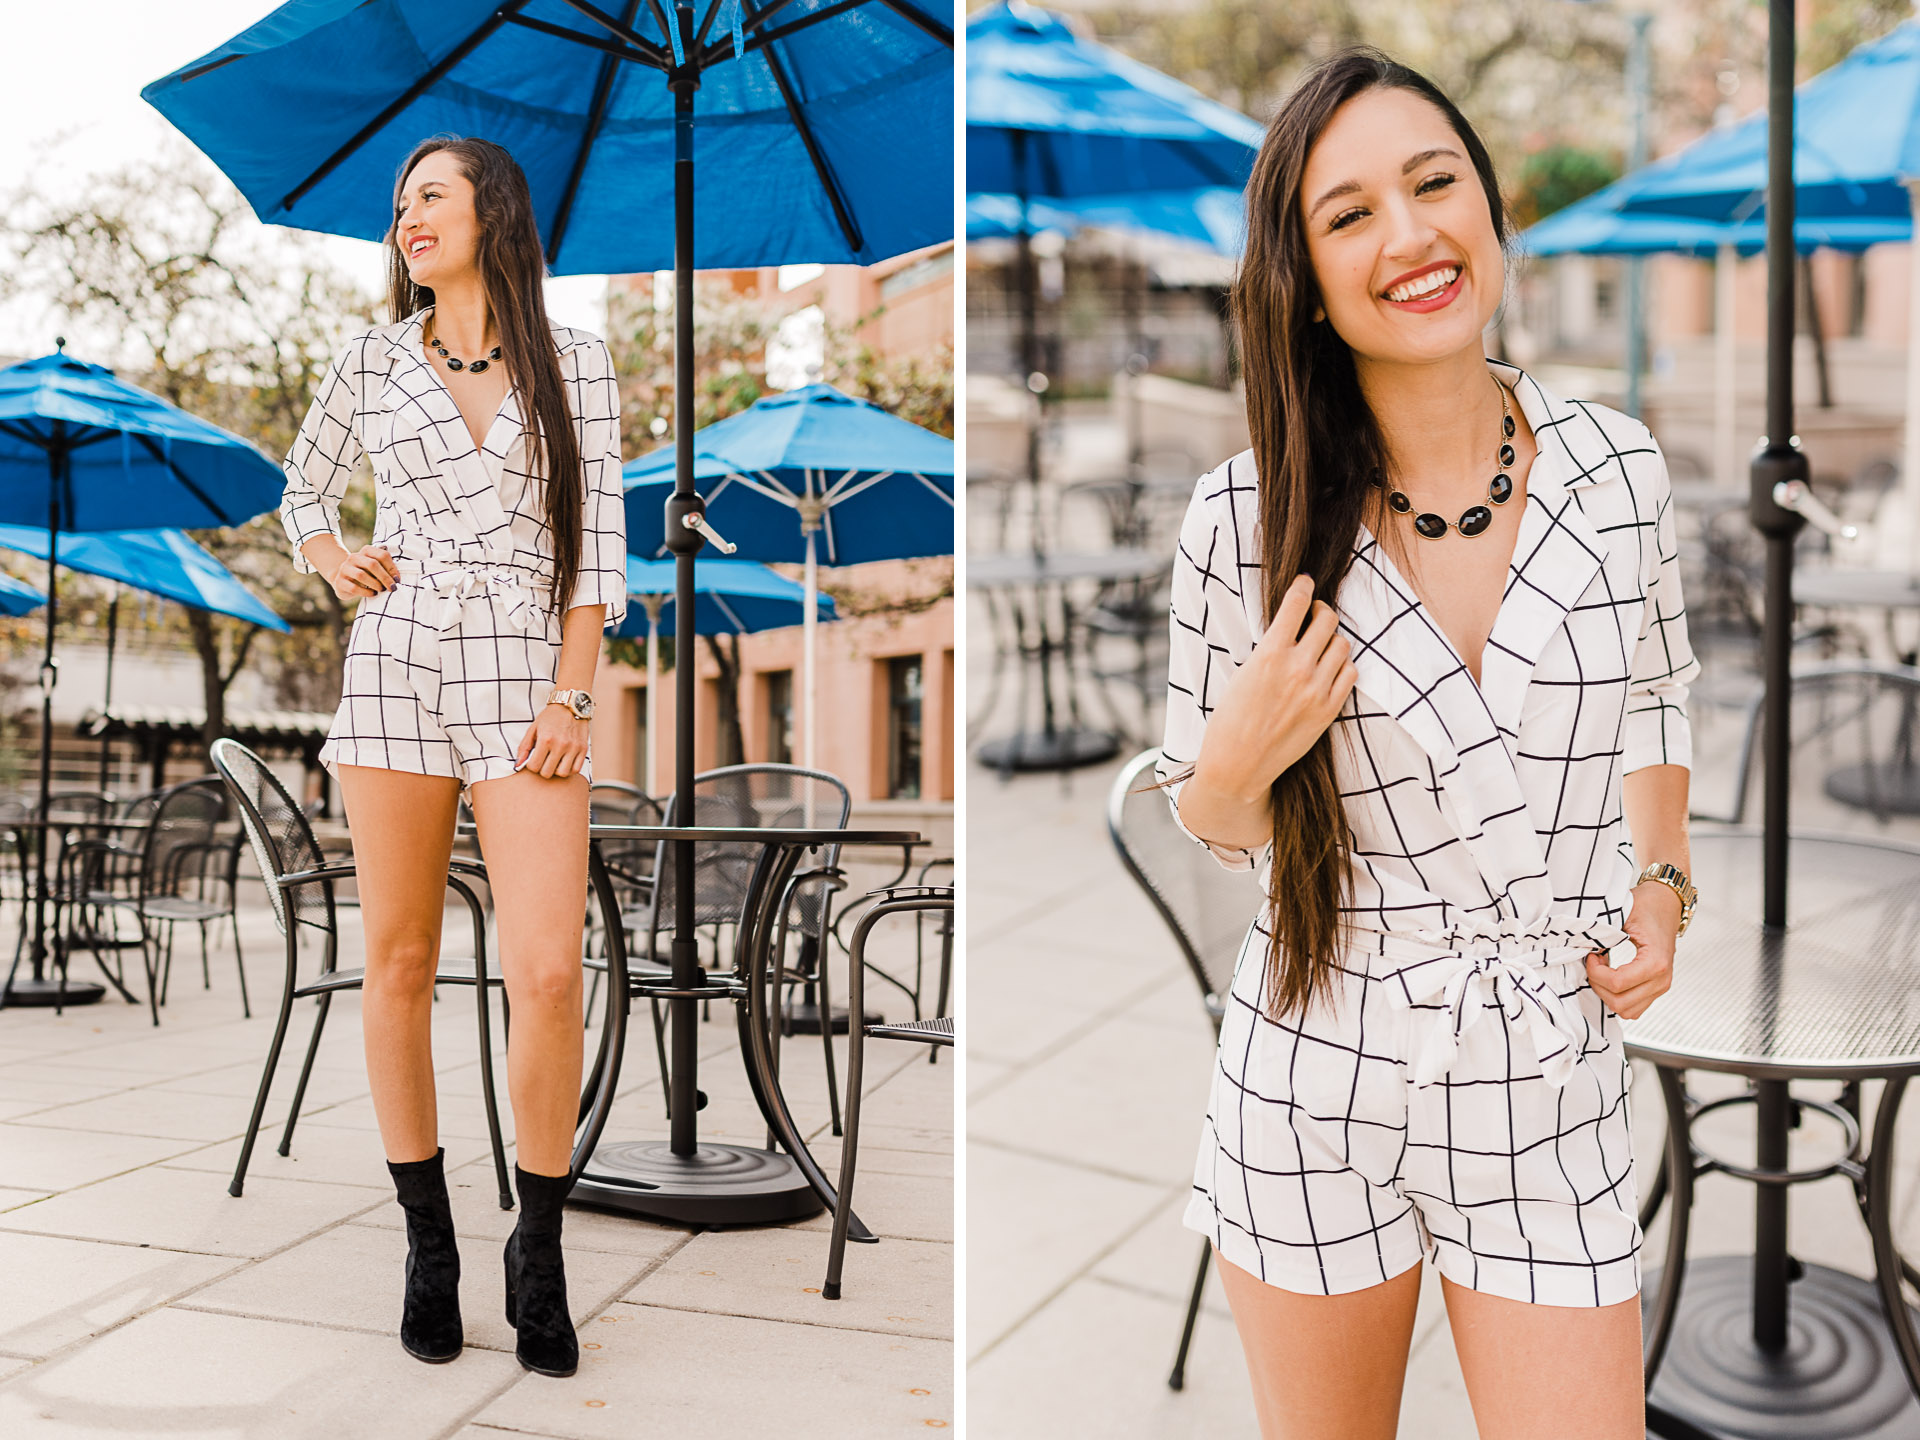 Sonia Fashion Blogger - San Jose Influencer, Blogger, and Branding Photographer